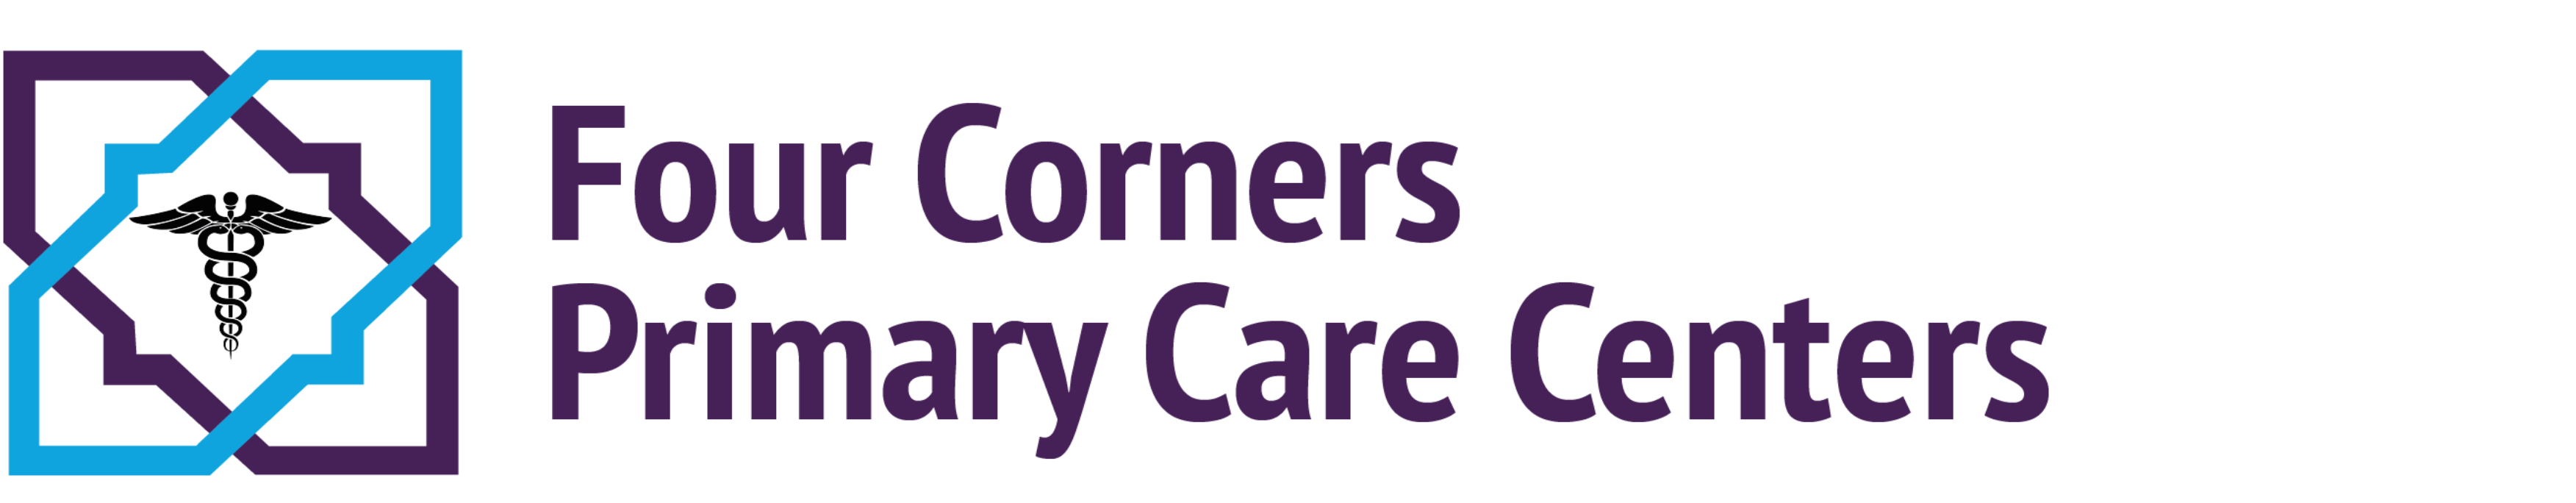 Four Corners Primary Care Centers